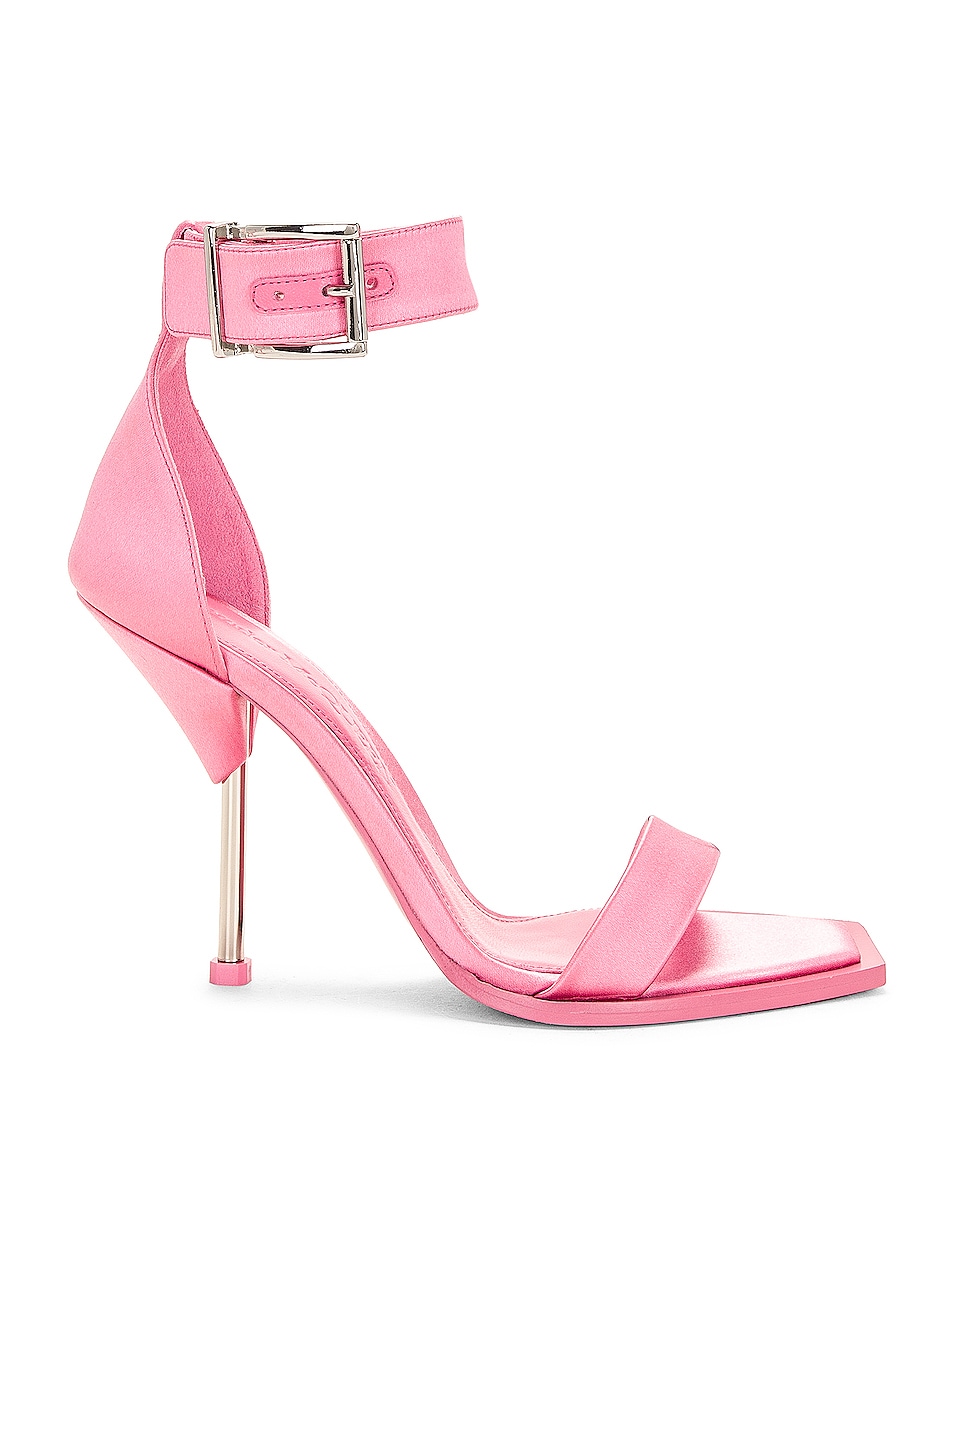 Image 1 of Alexander McQueen Satin Sandal in Sugar Pink & Silver